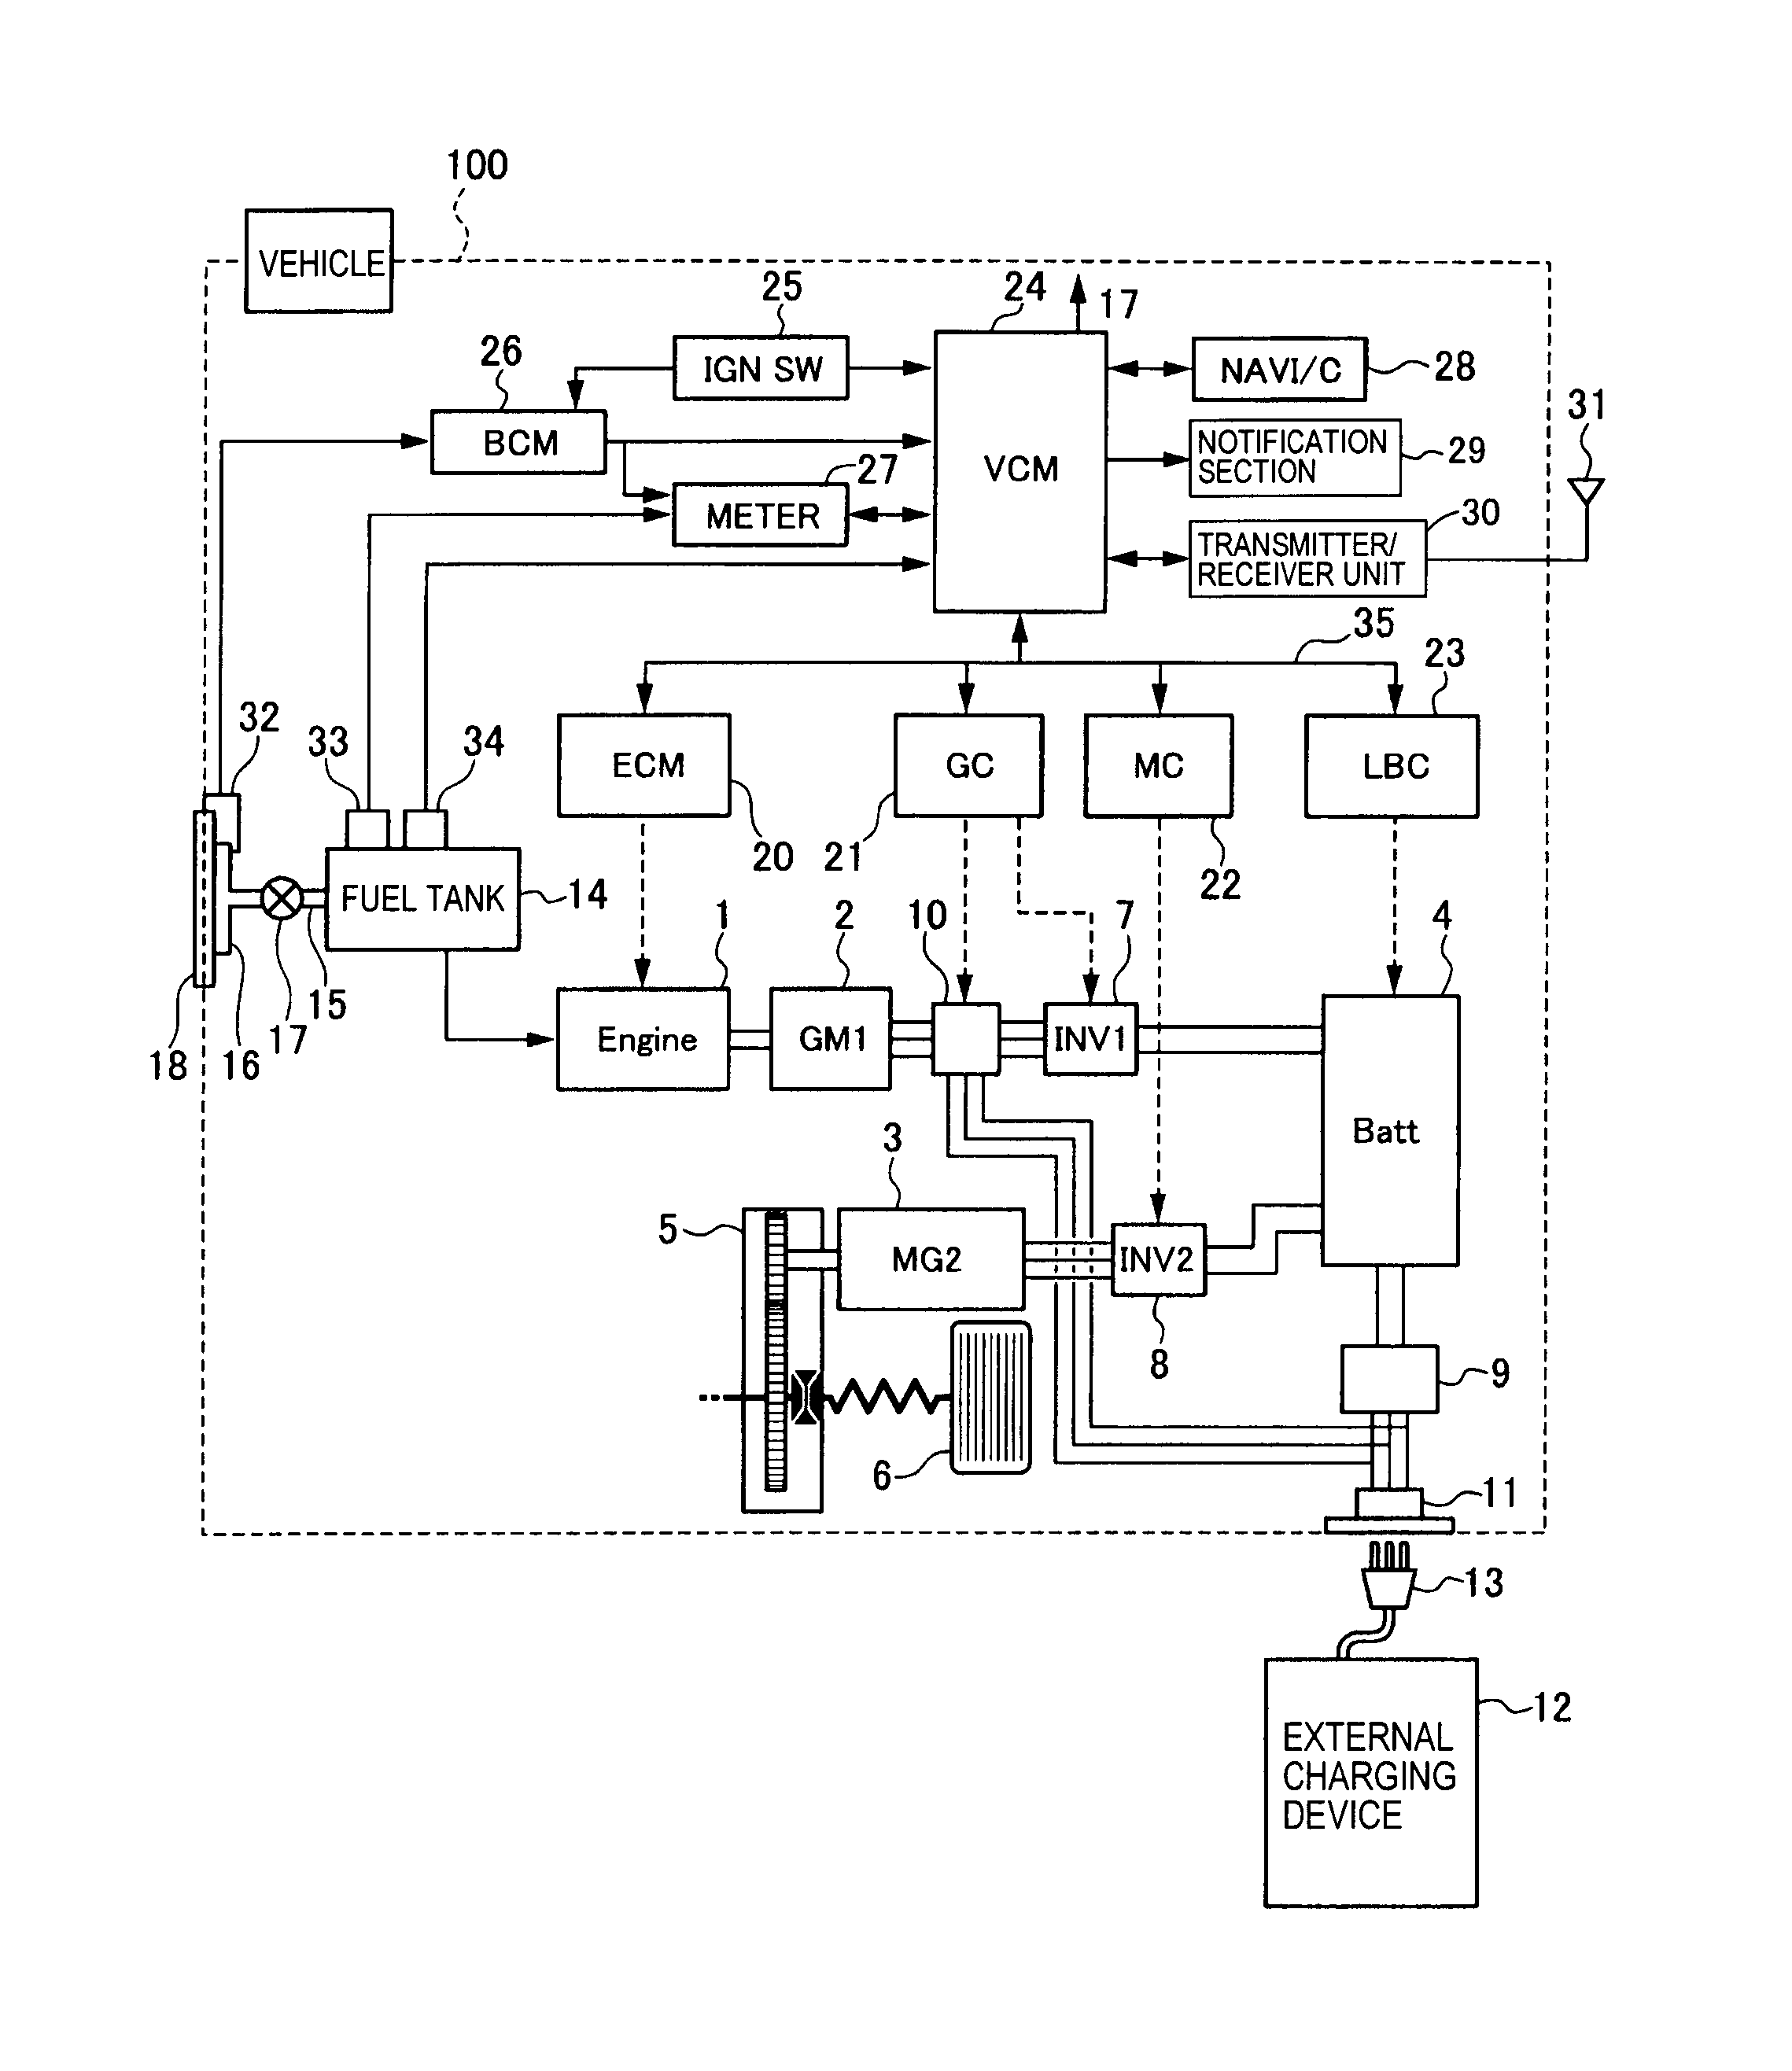 1995 navstar 4700 wiring diagram